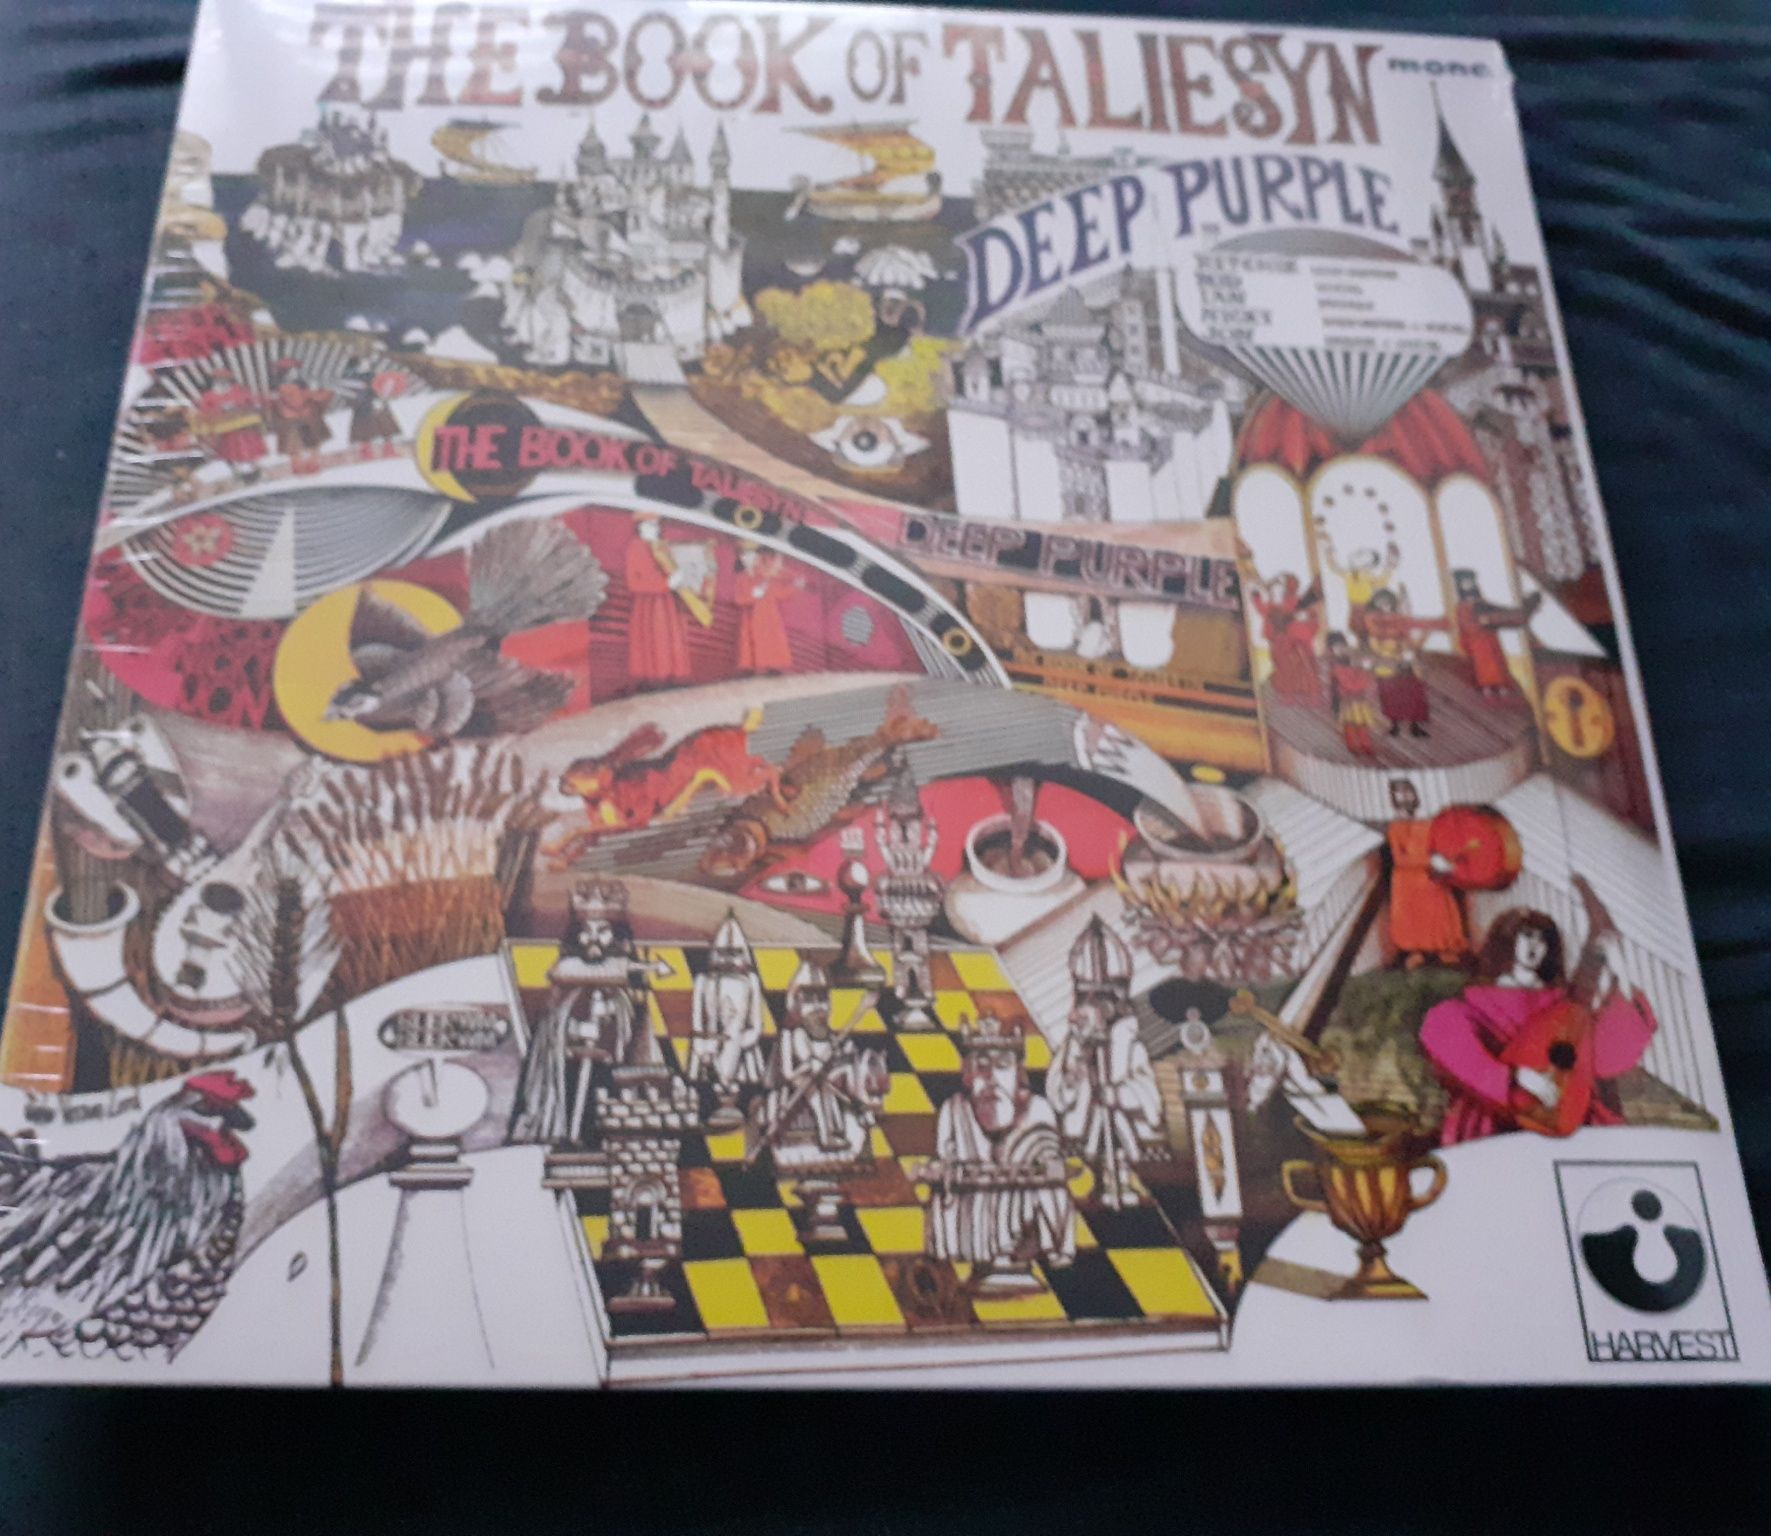 Deep Purple - The book of taliesyn